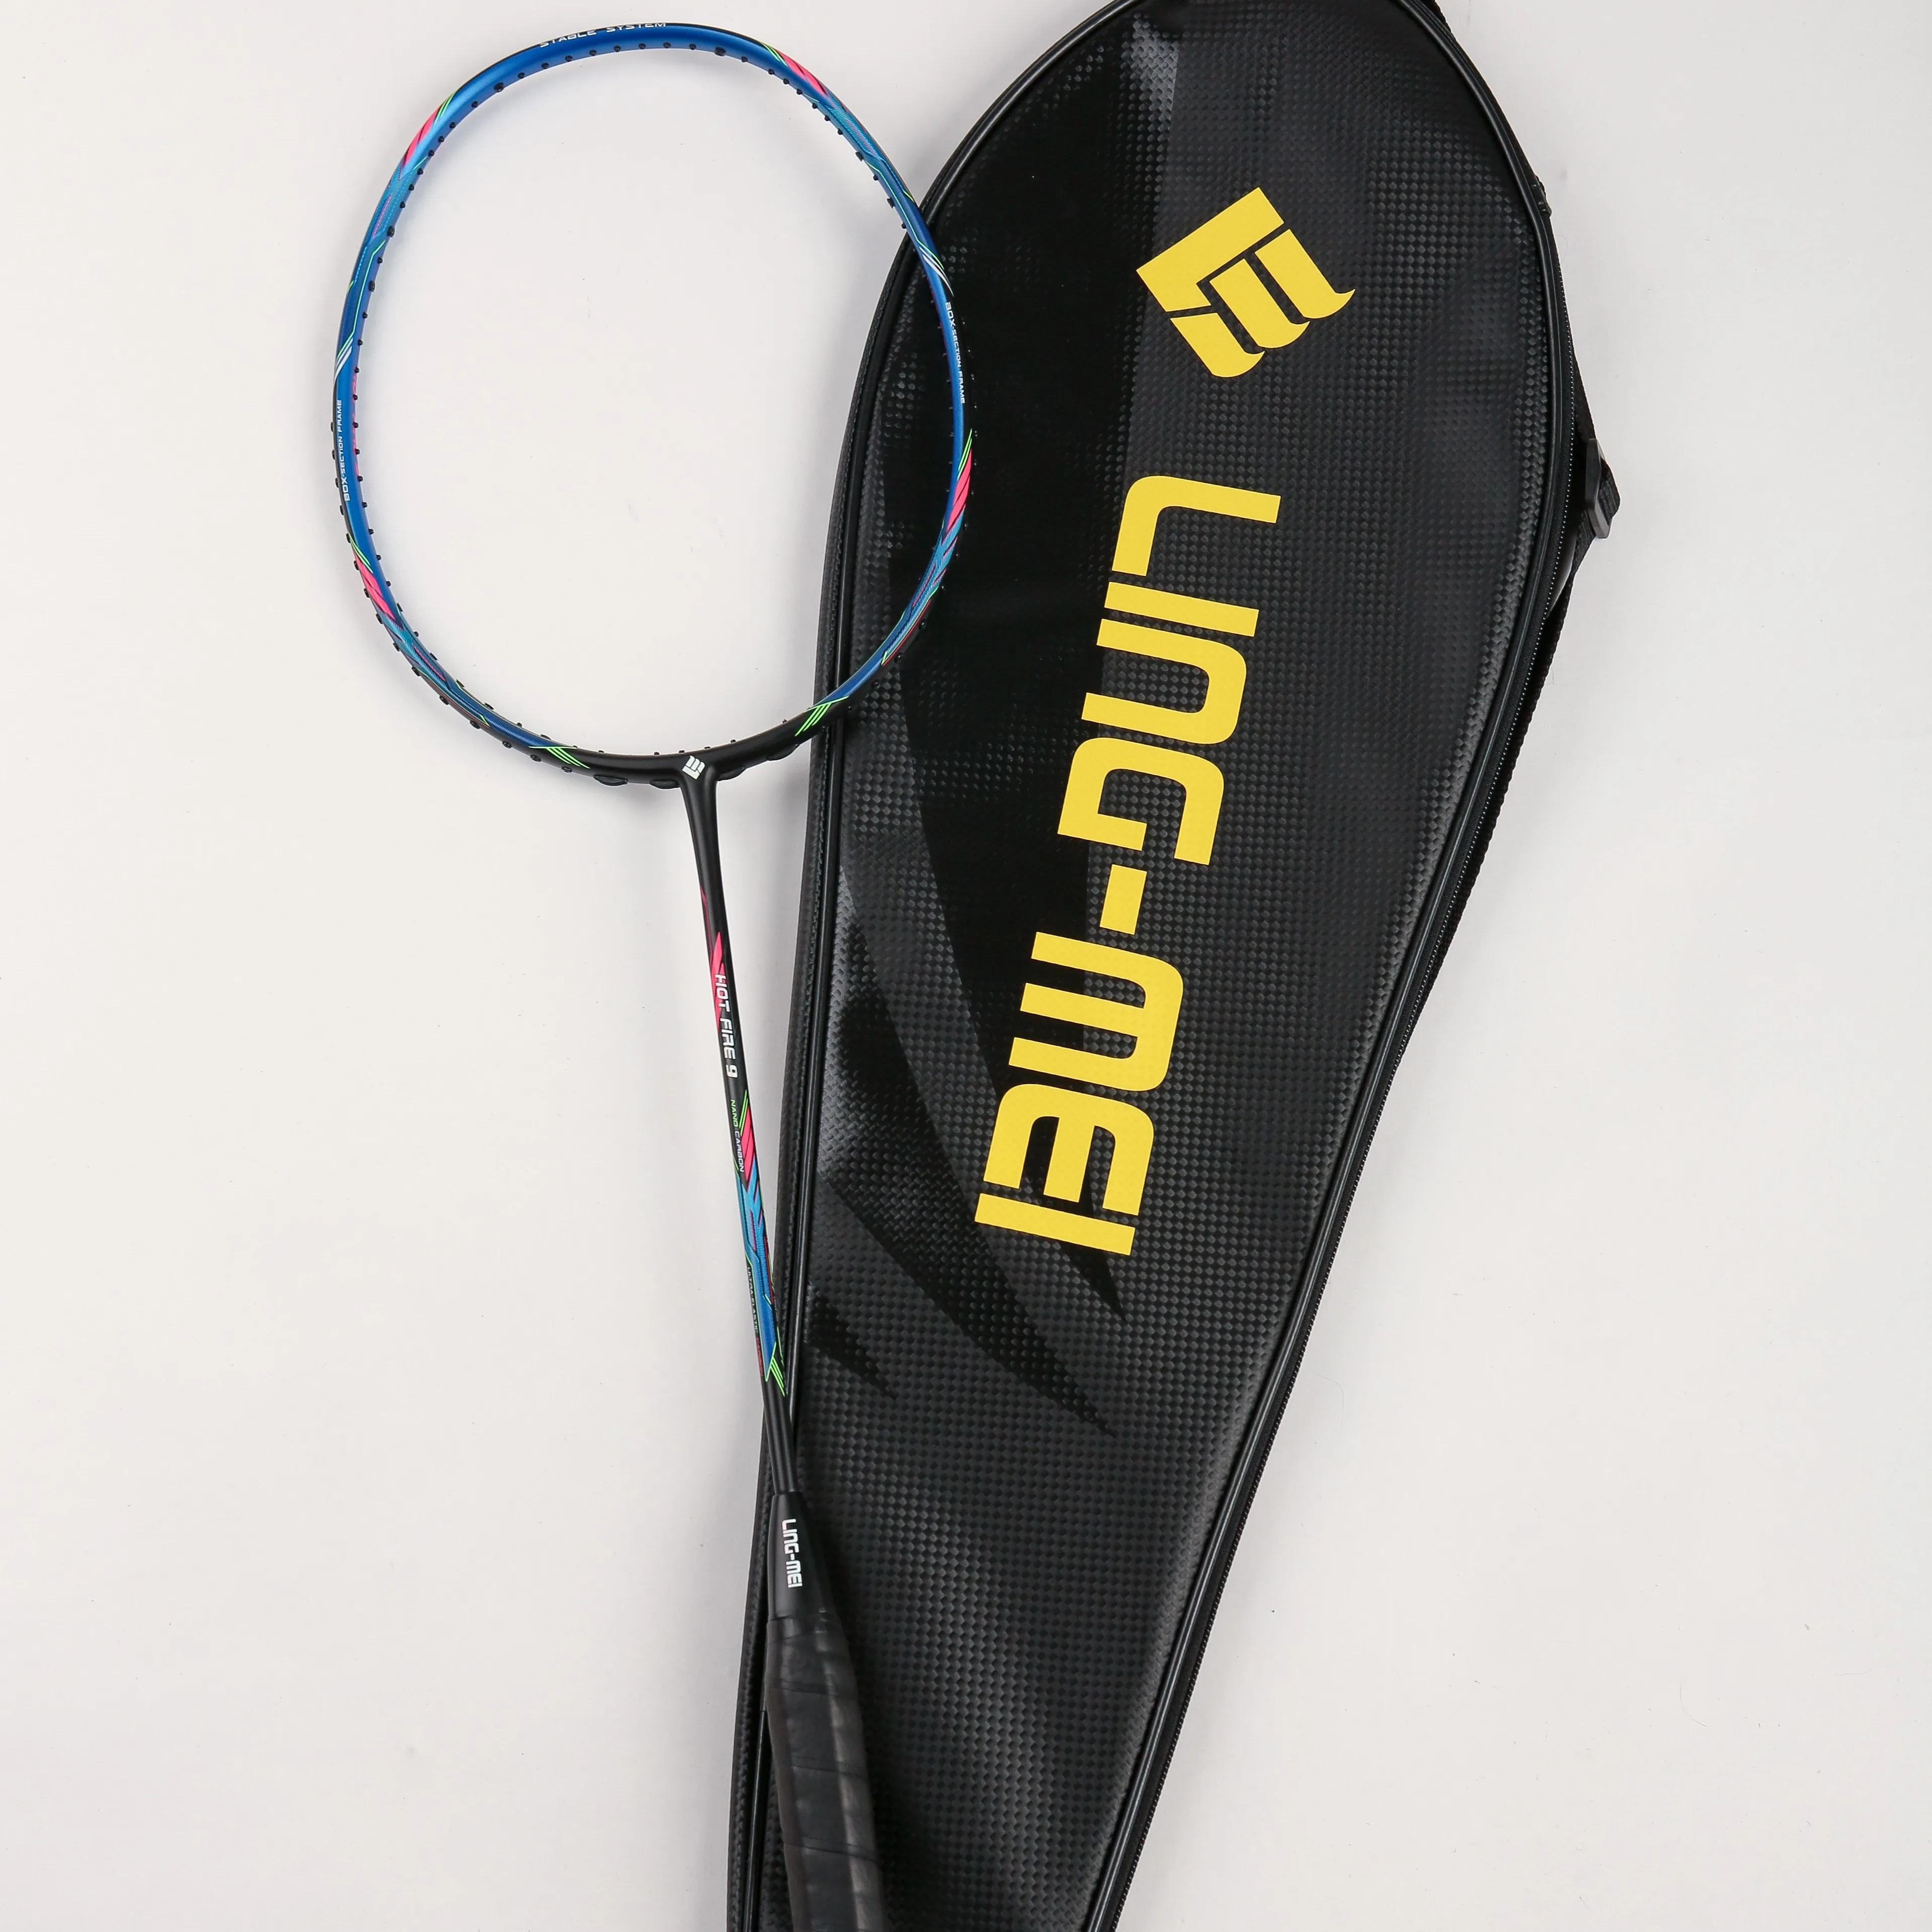 OEM design badminton racket H9 model